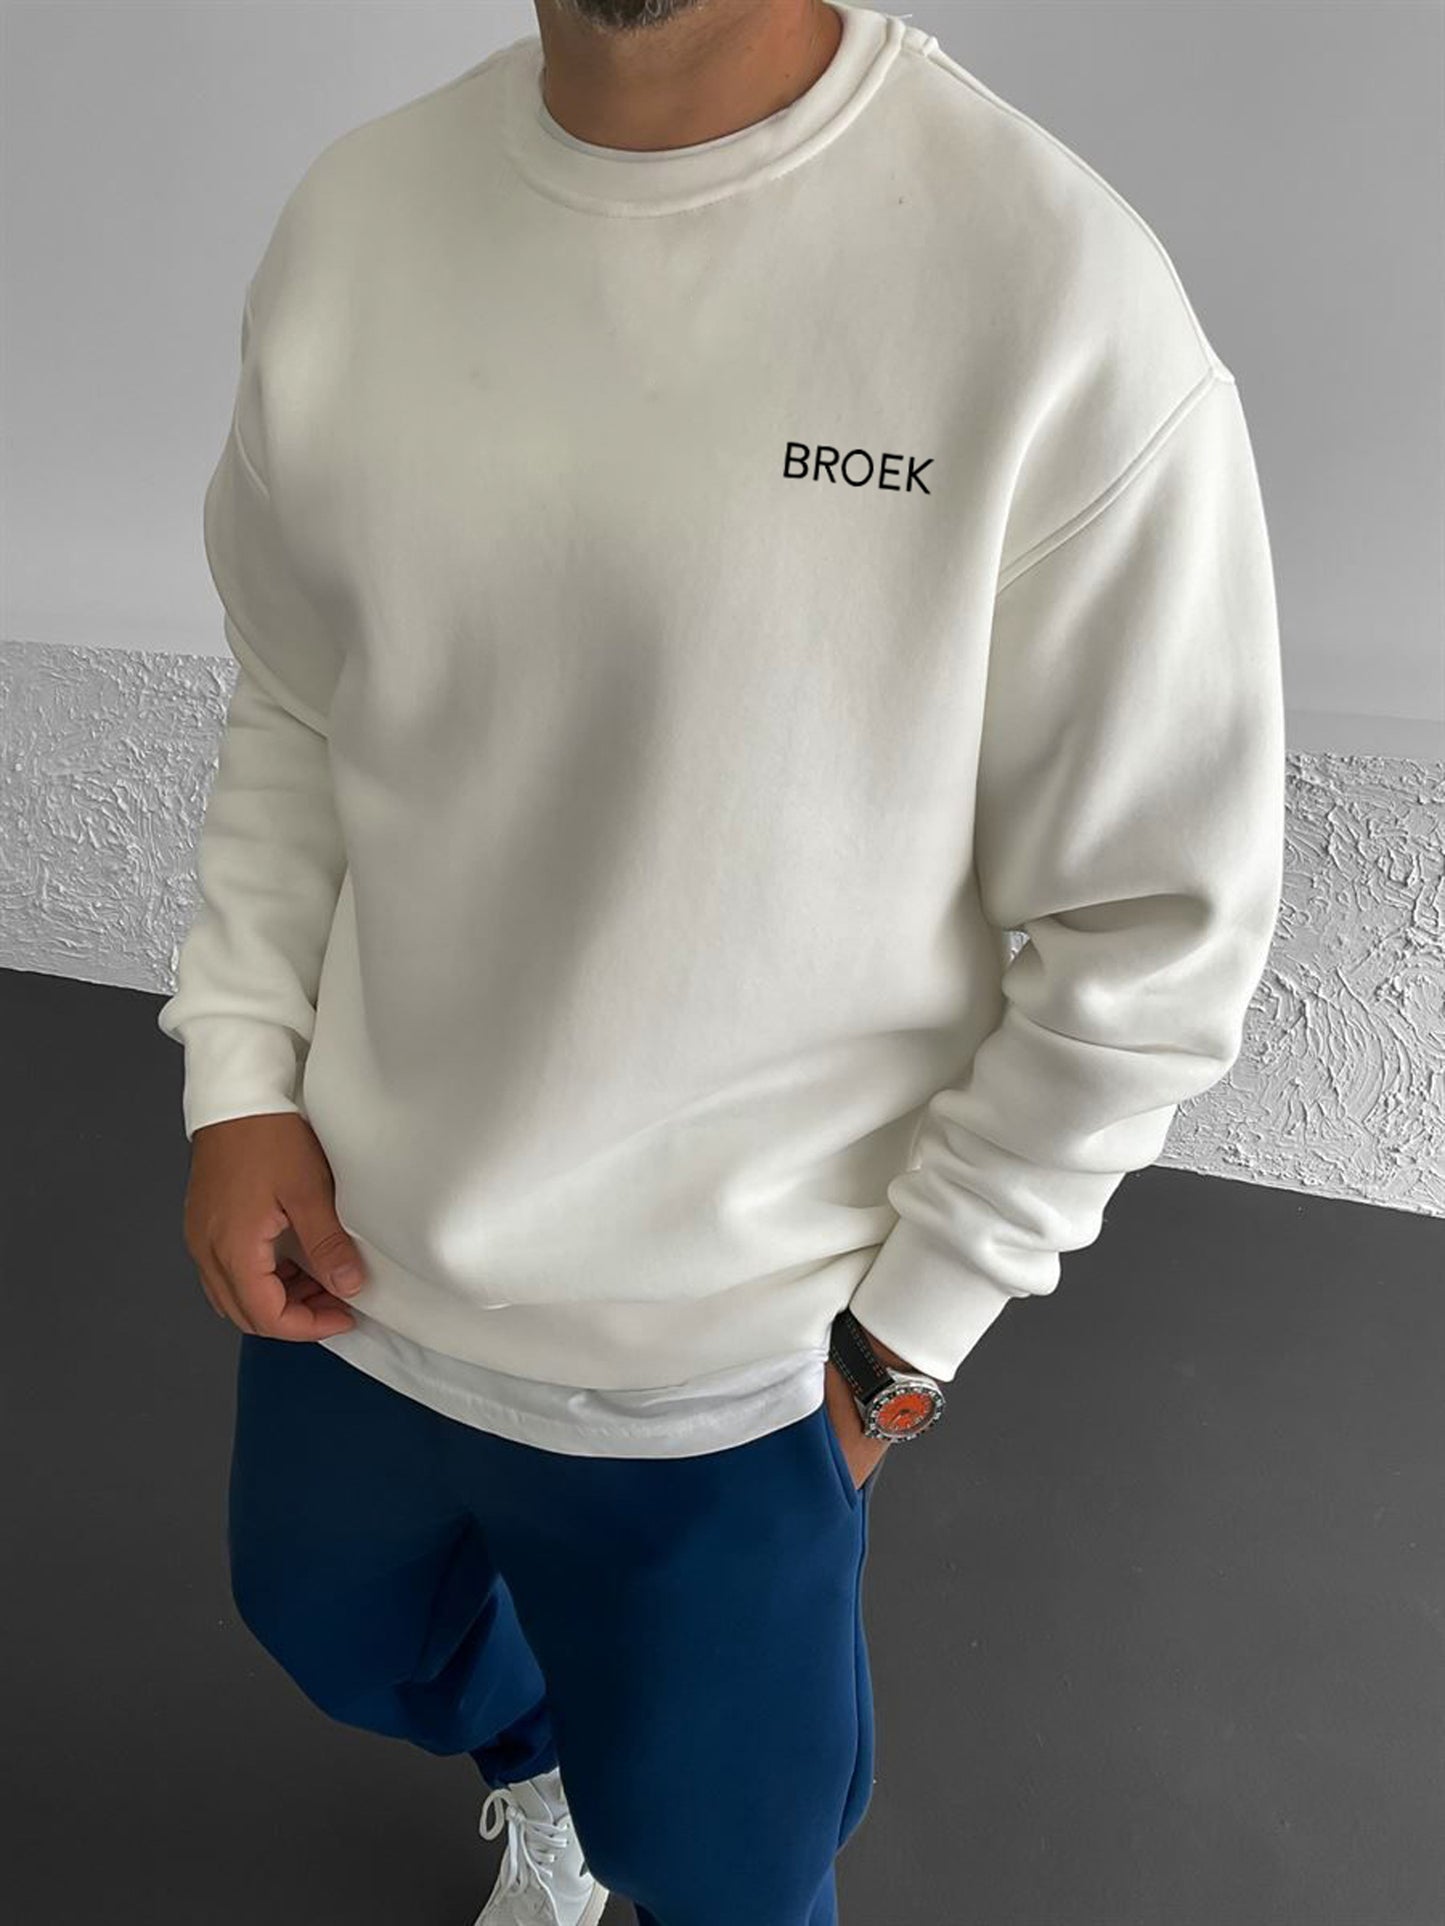 Off-White "Not-Basic" Printed Oversize Sweatshirt